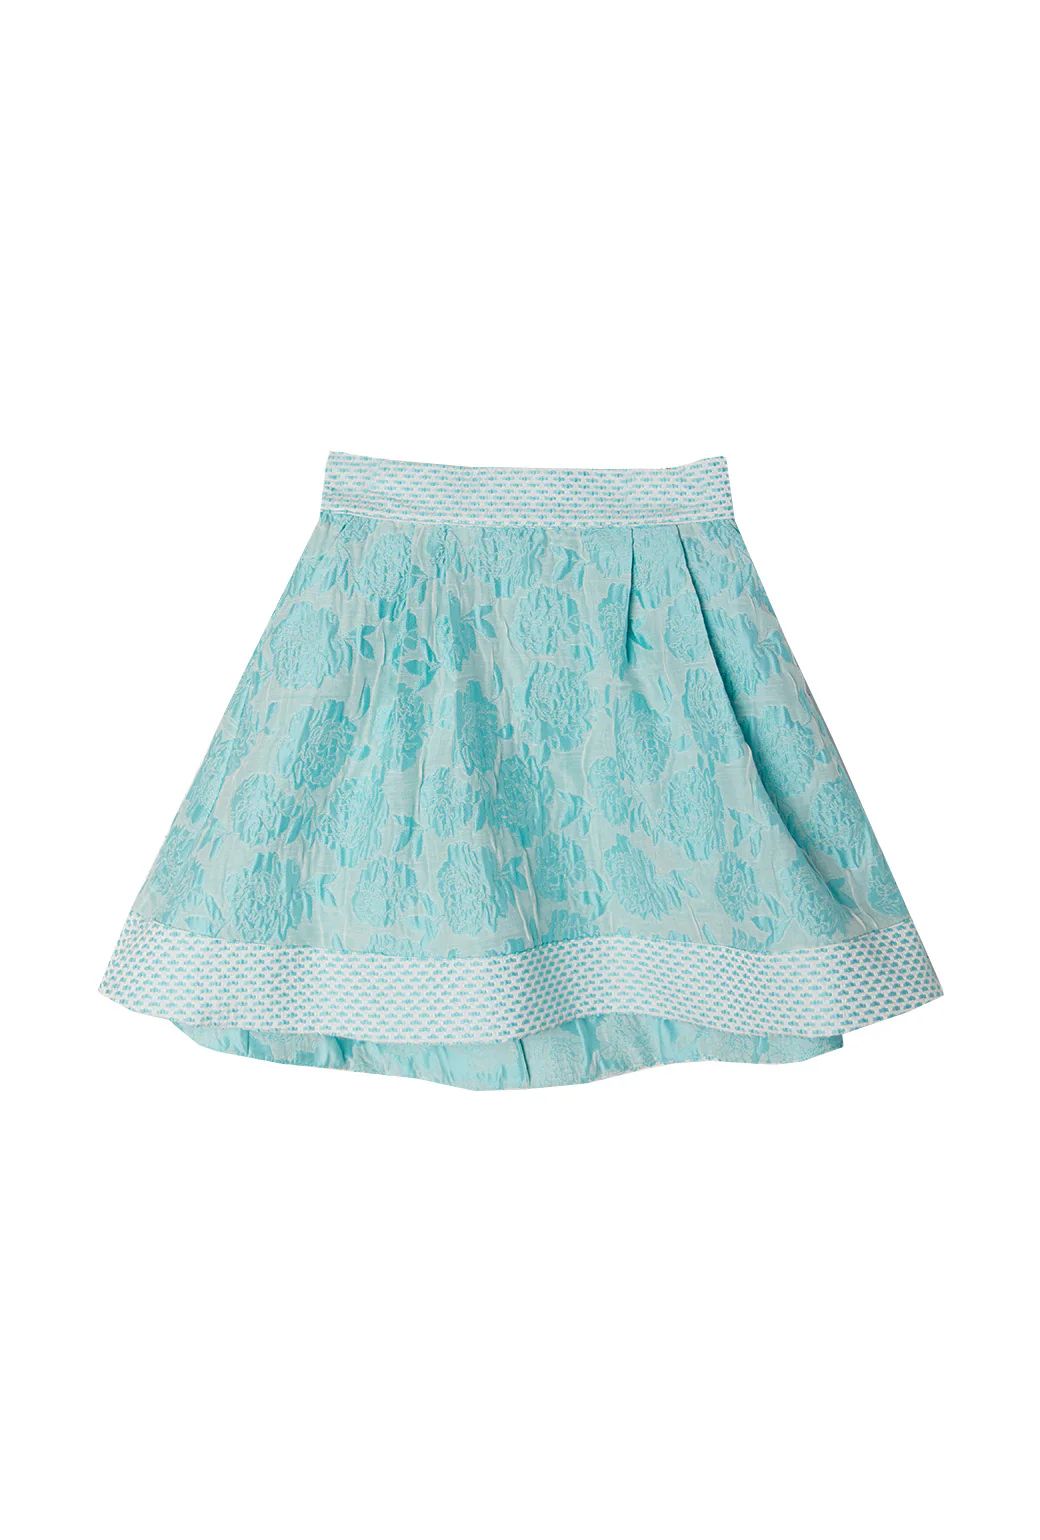 BURU x Pappy & Co Flat Front Everyday MINI Skirt - Aqua Brocade | Shop BURU